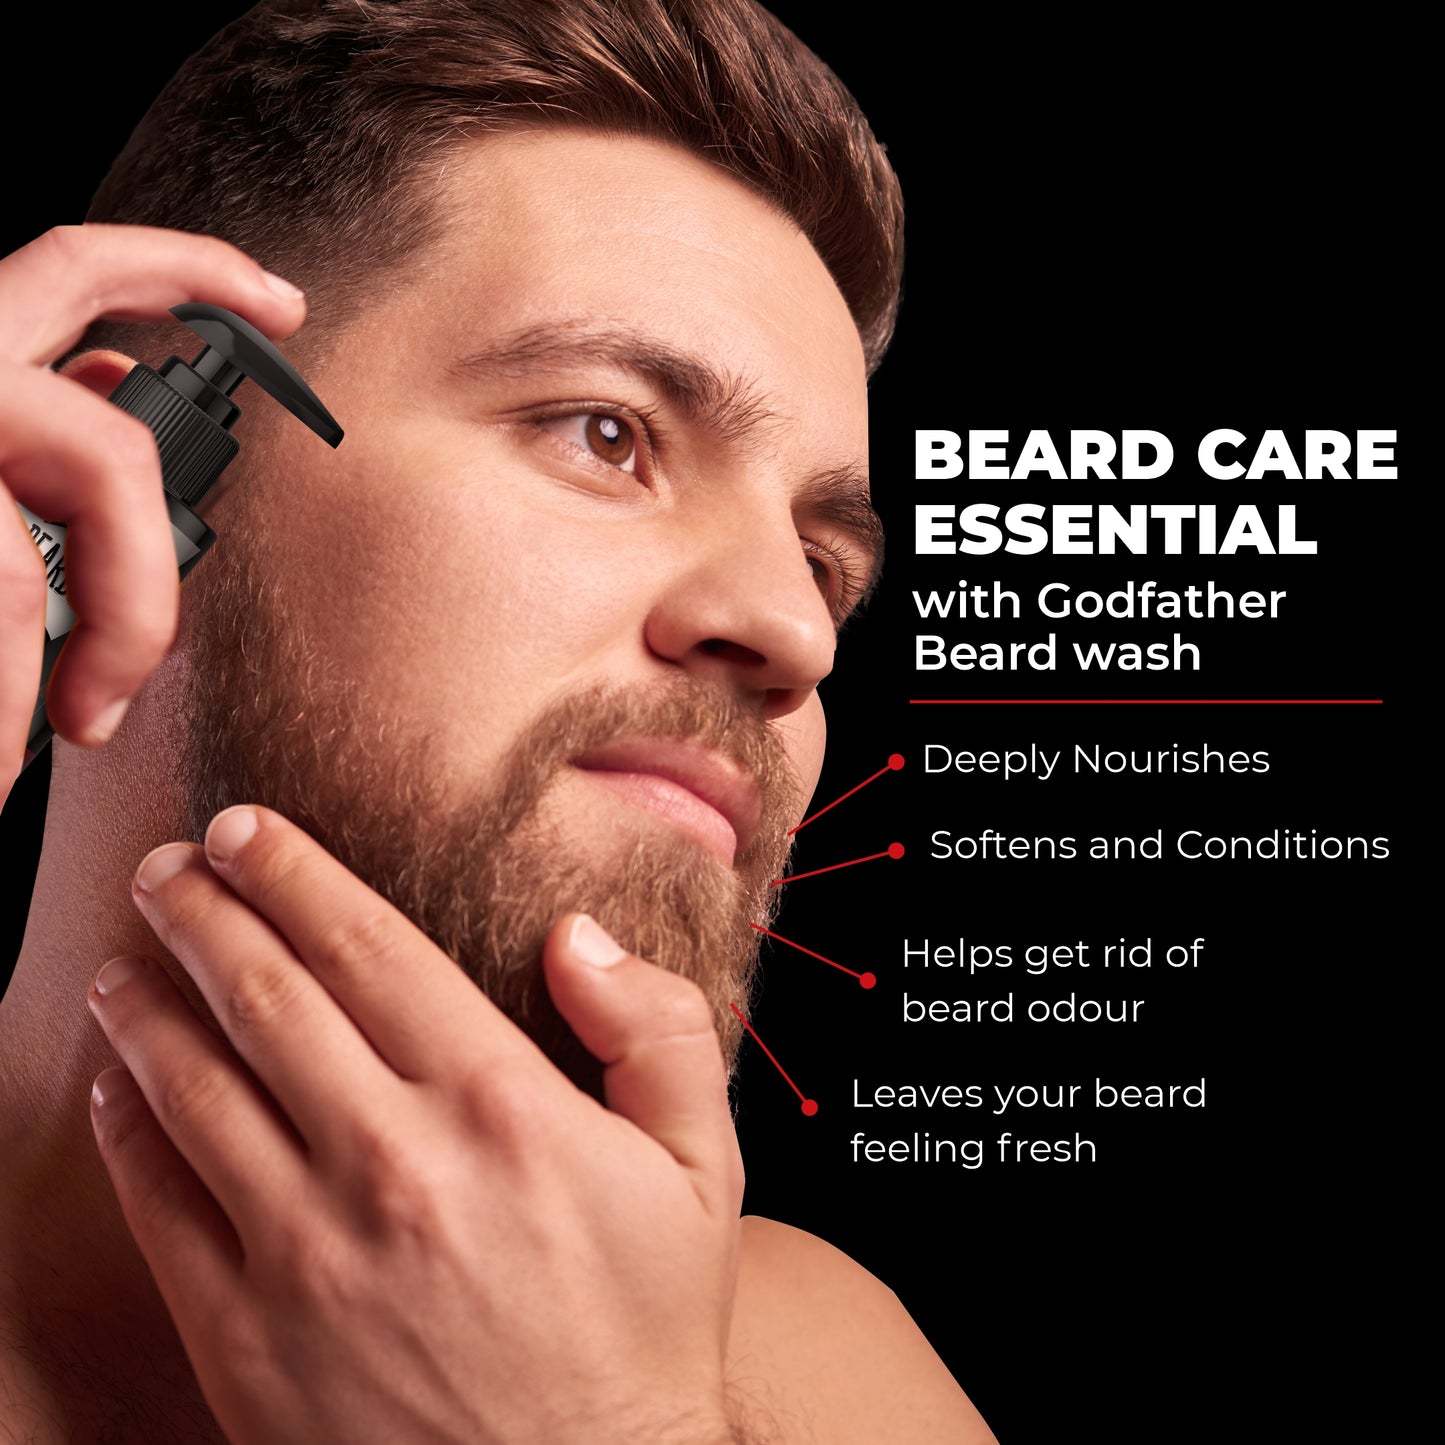 Beardo Beard Starter Kit